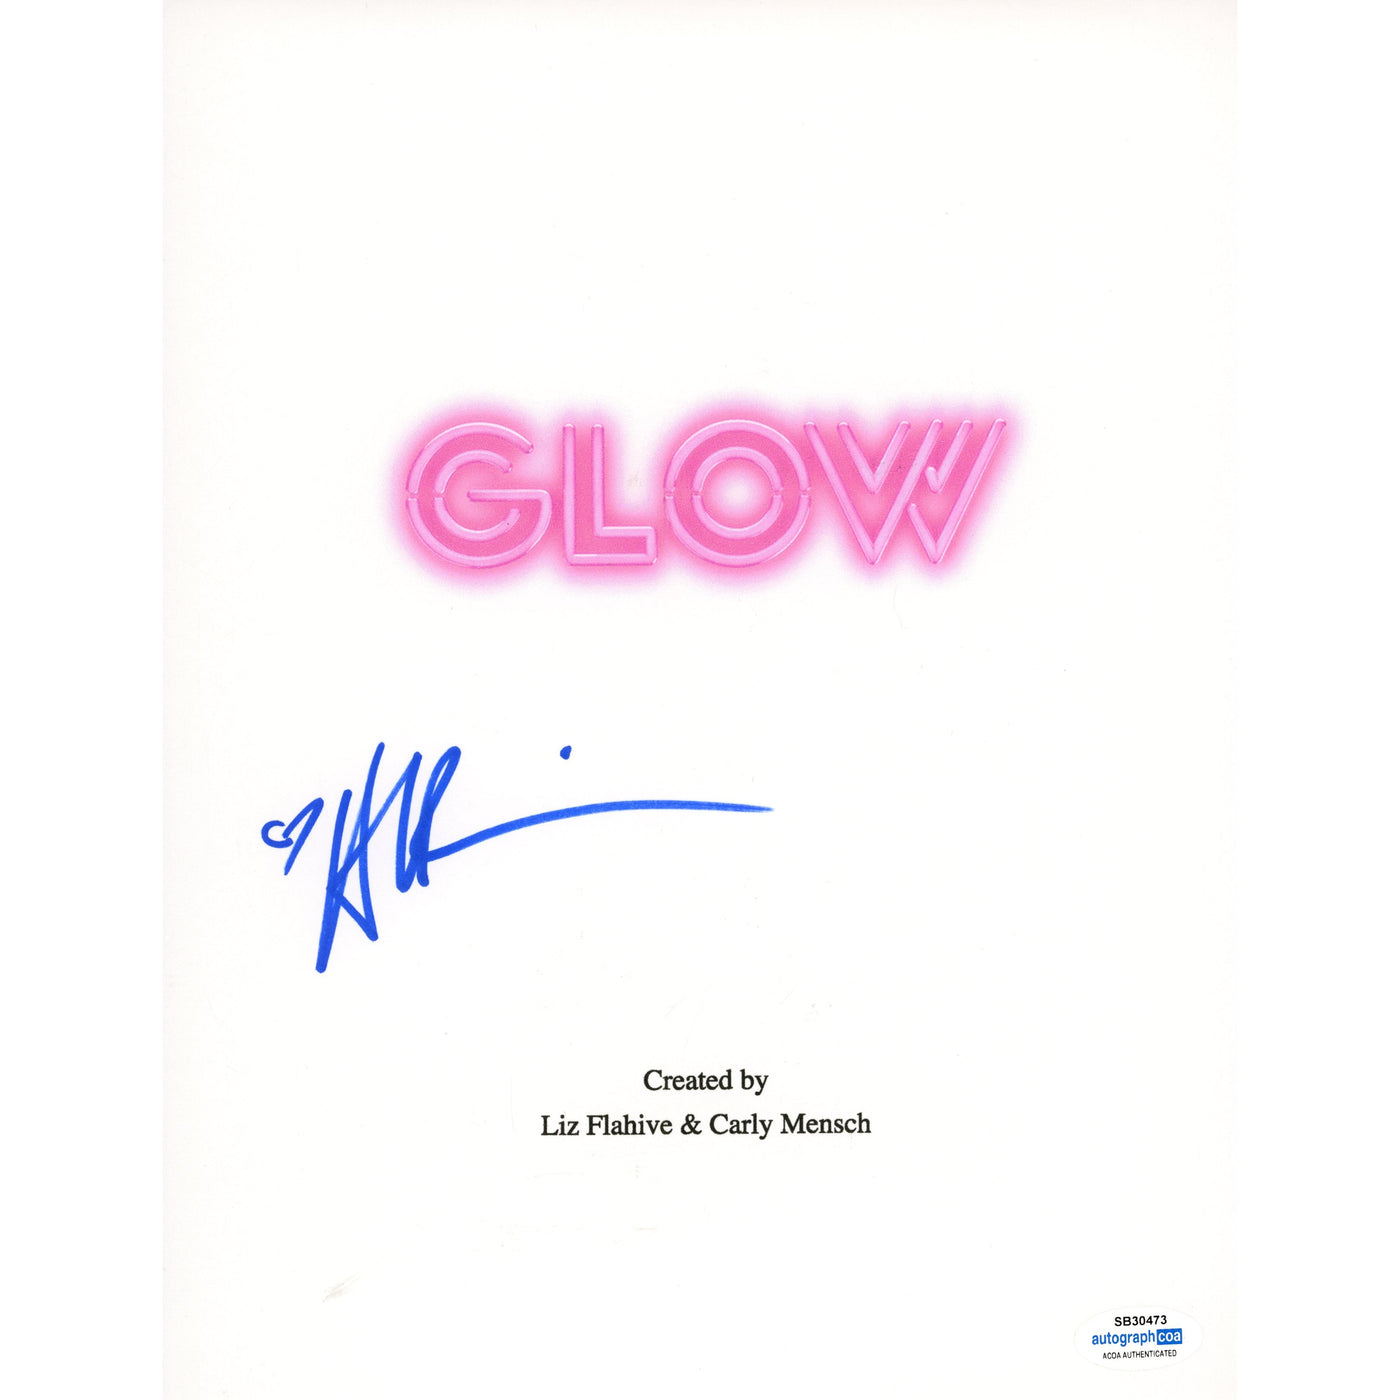 Alison Brie Signed Movie Script Cover GLOW Autographed ACOA 2